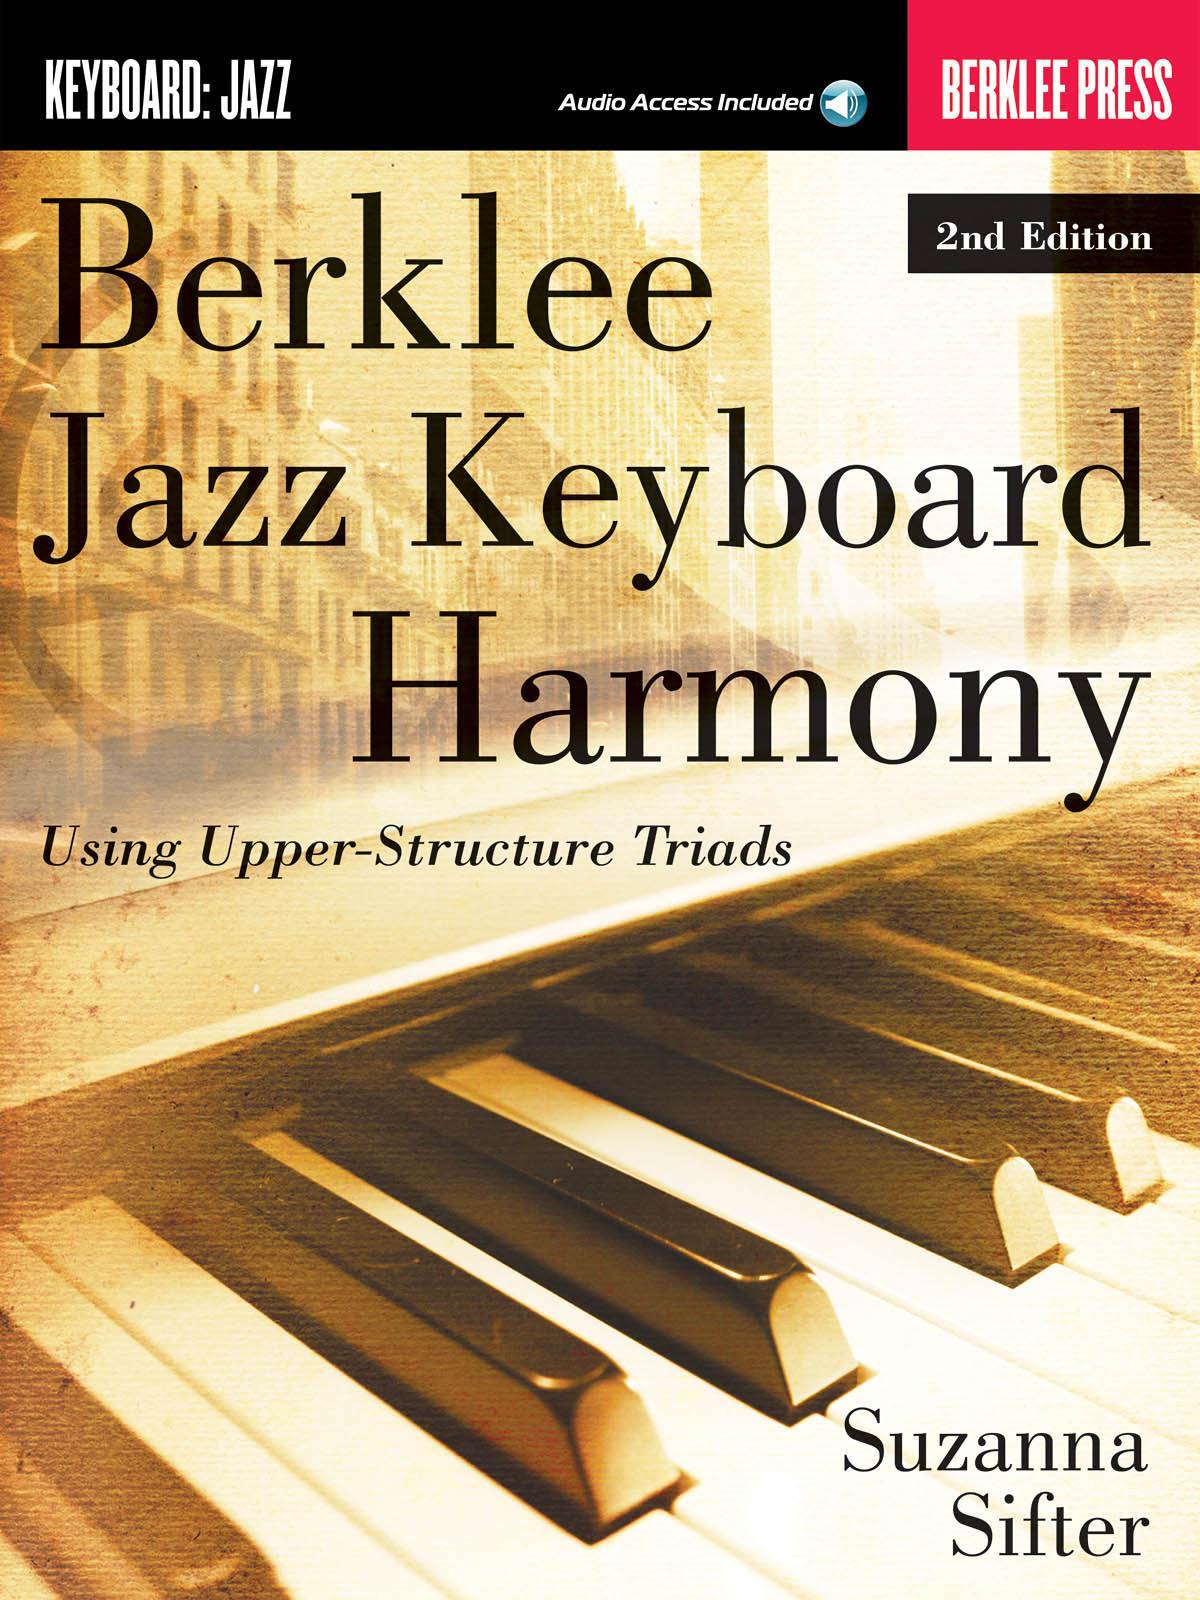 Berklee Jazz Keyboard Harmony - 2nd Edition - pro keyboard